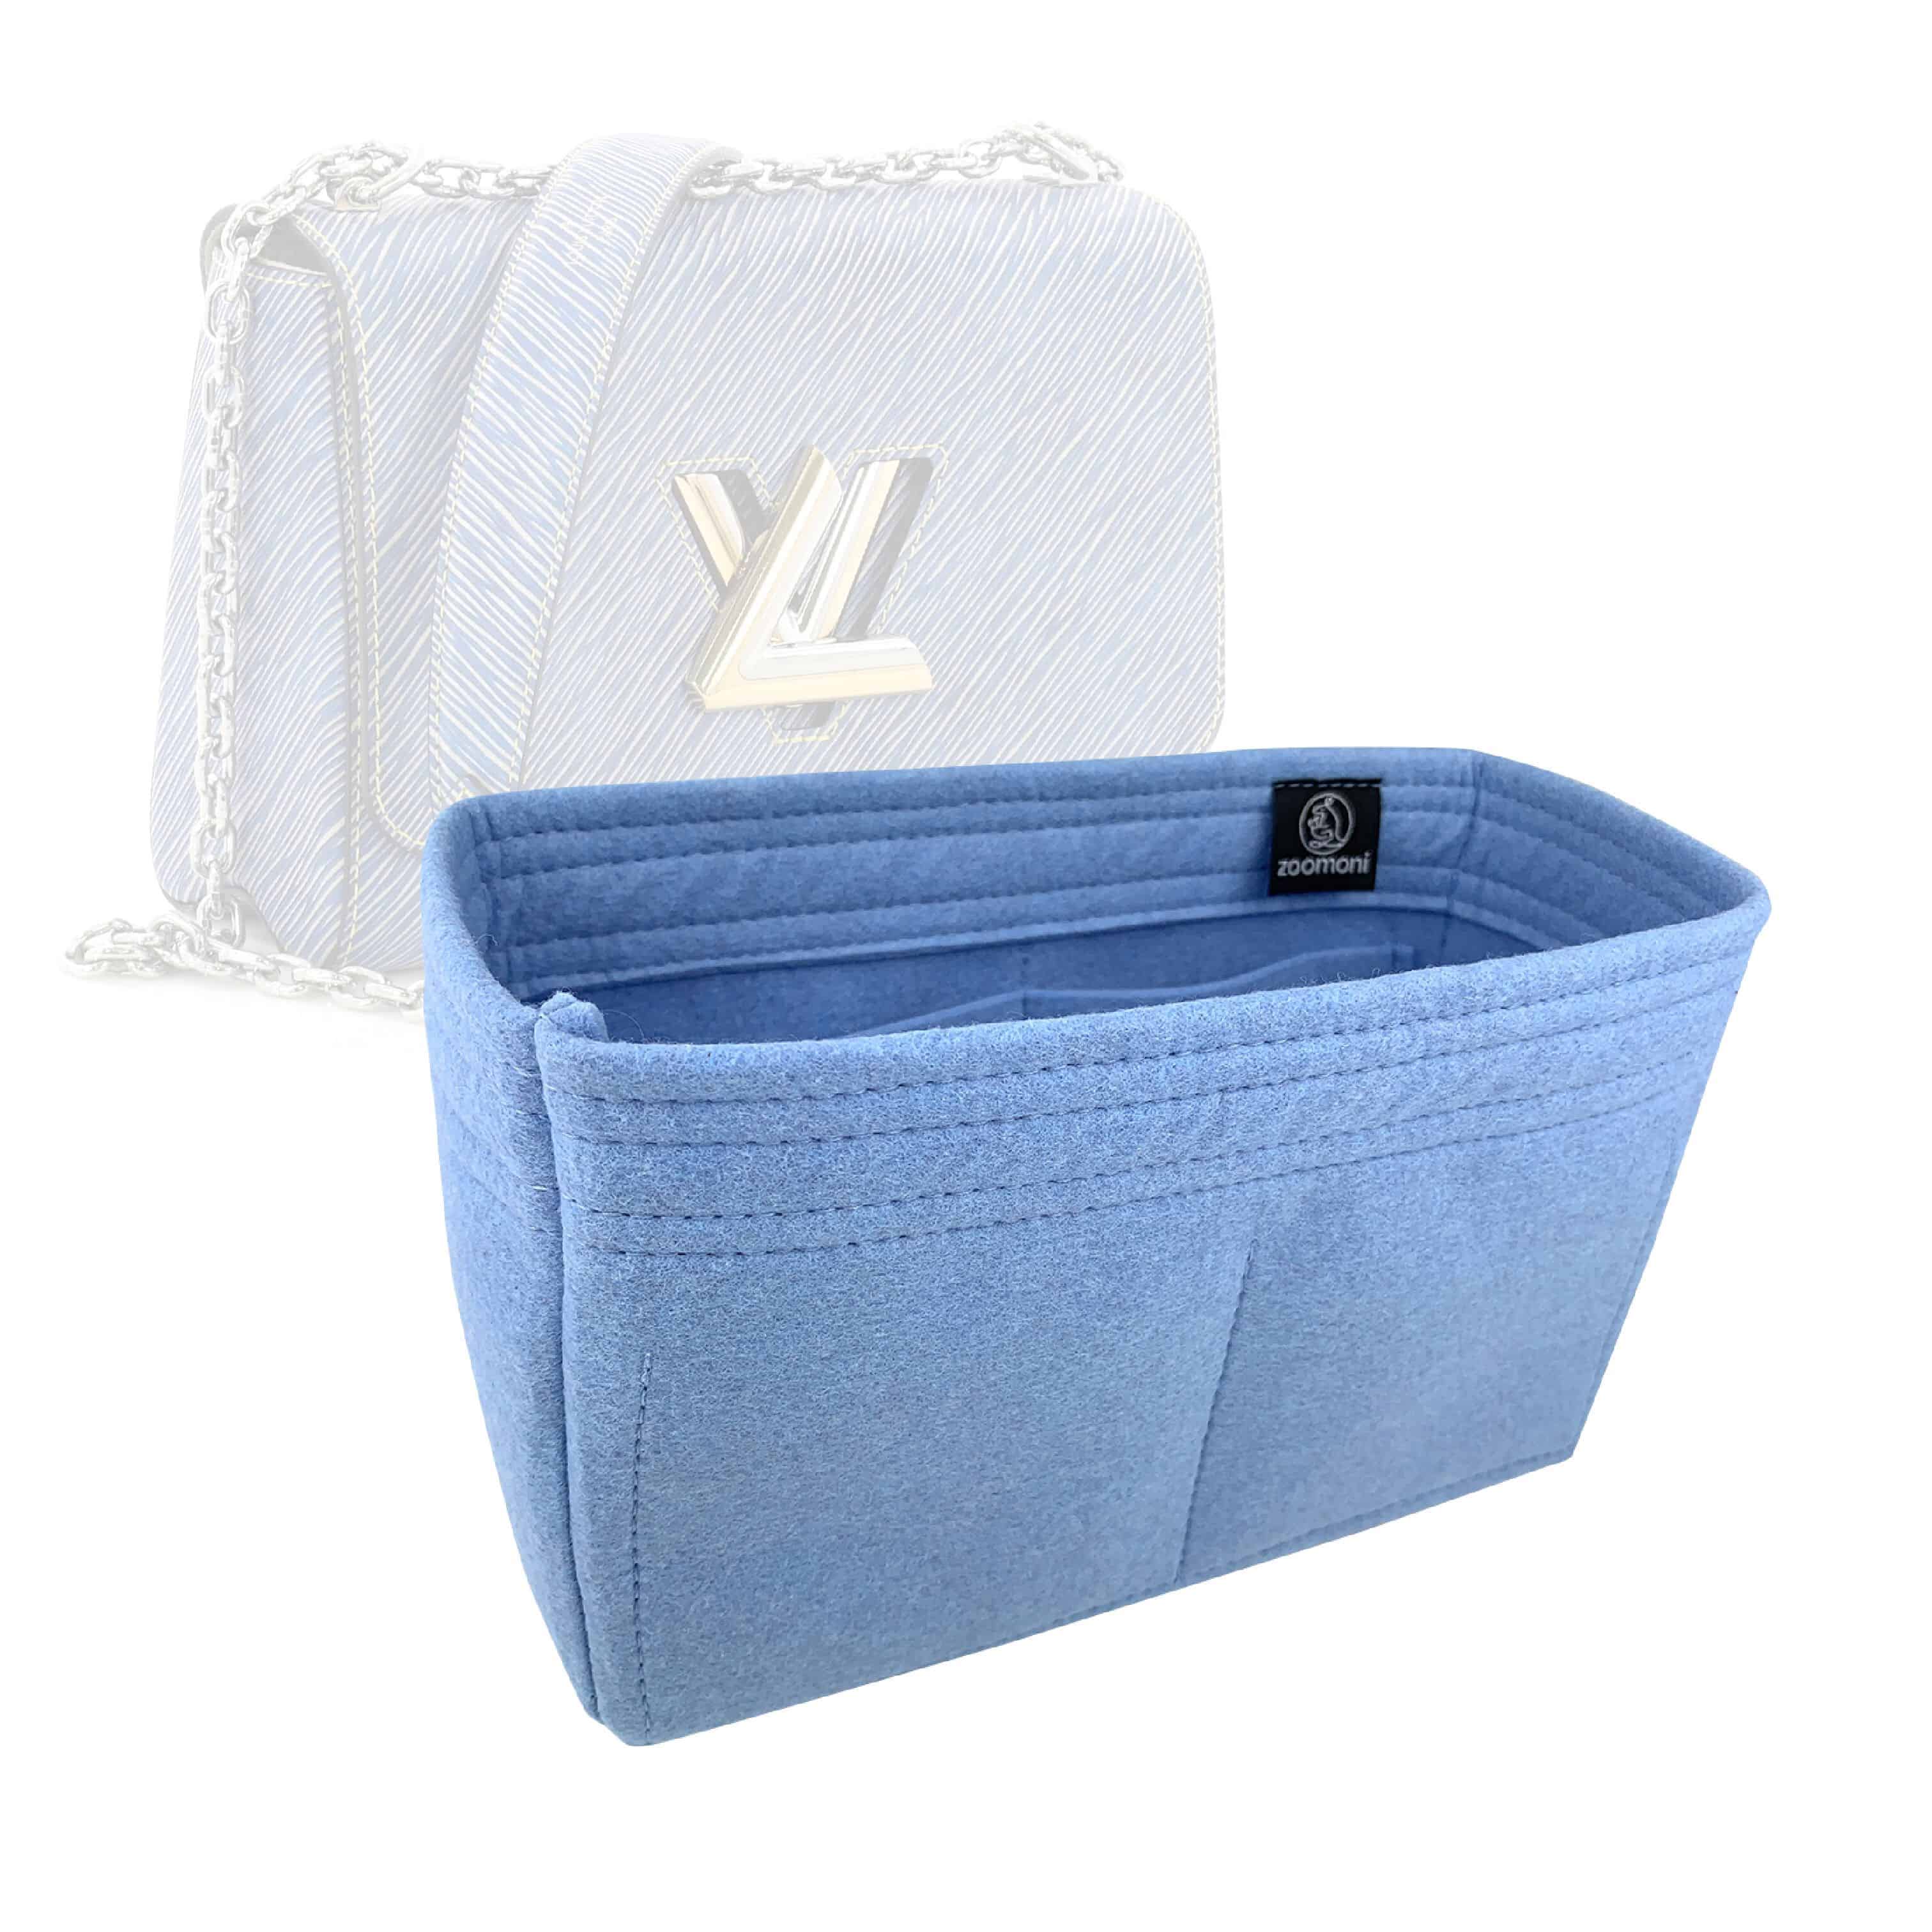  Zoomoni Premium Bag Organizer for LV Louis Vuitton Vaugirard  Insert (Set of 2) (Handmade/20 Color Options) [Purse Organiser, Liner,  Insert, Shaper] : Handmade Products